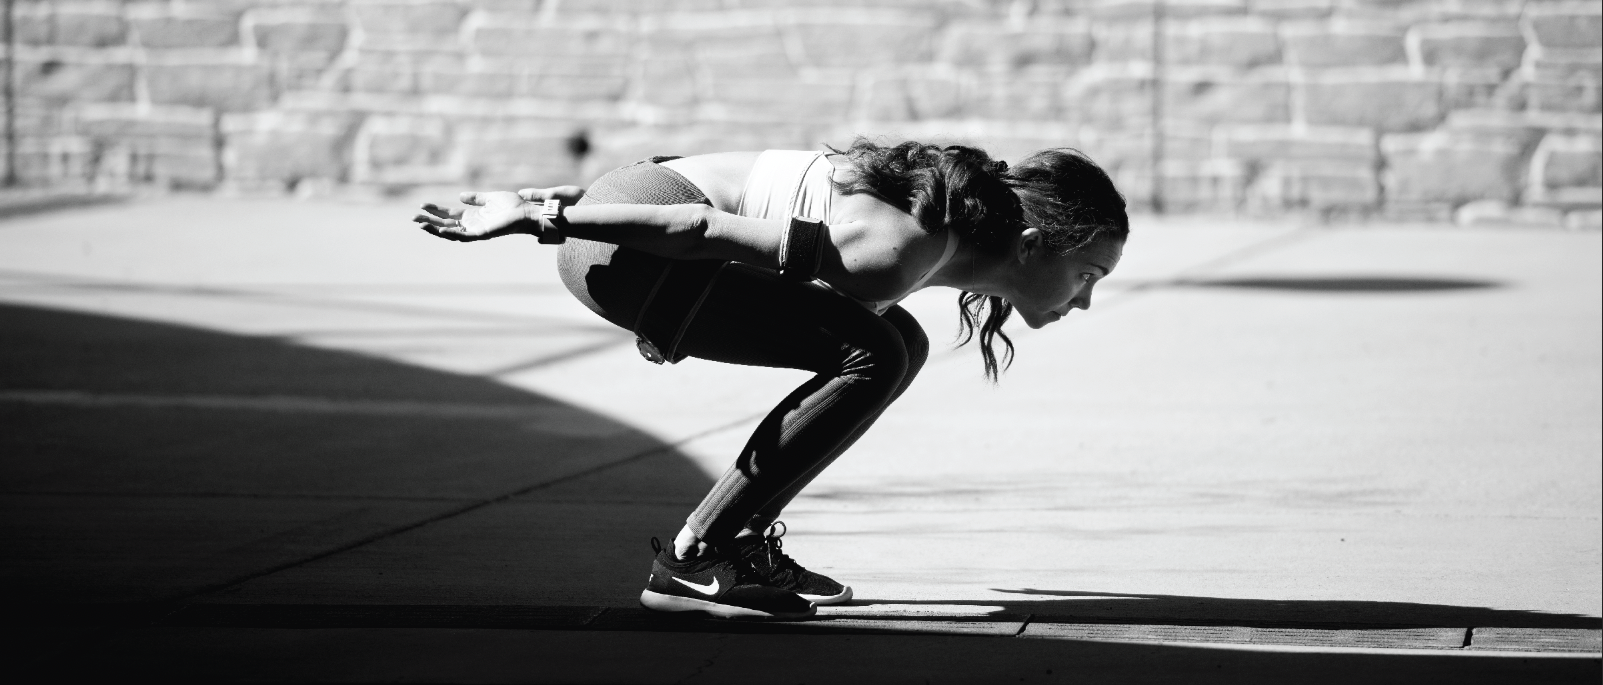 Women’s Ski Jump Olympic Pioneer Sarah Hendrickson uses B Strong BFR Training